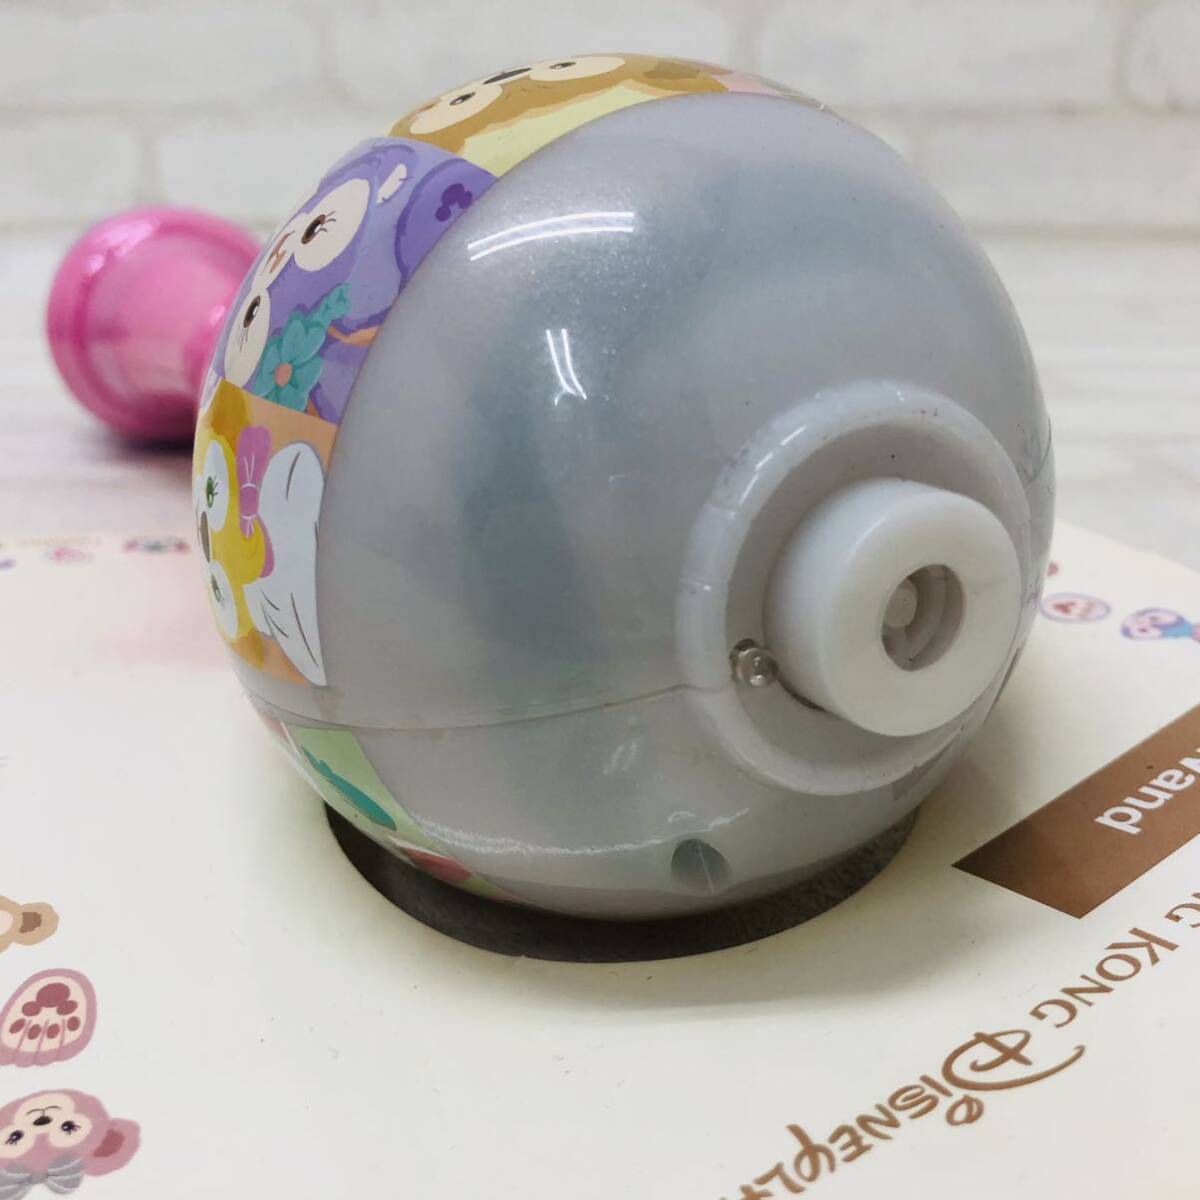 T#② не использовался HONG KONG Disney Land Hong Kong Disney Land Duffy &f линзы розовый Bubble Wand Bubble машина автомобиль bon шар за границей хранение 